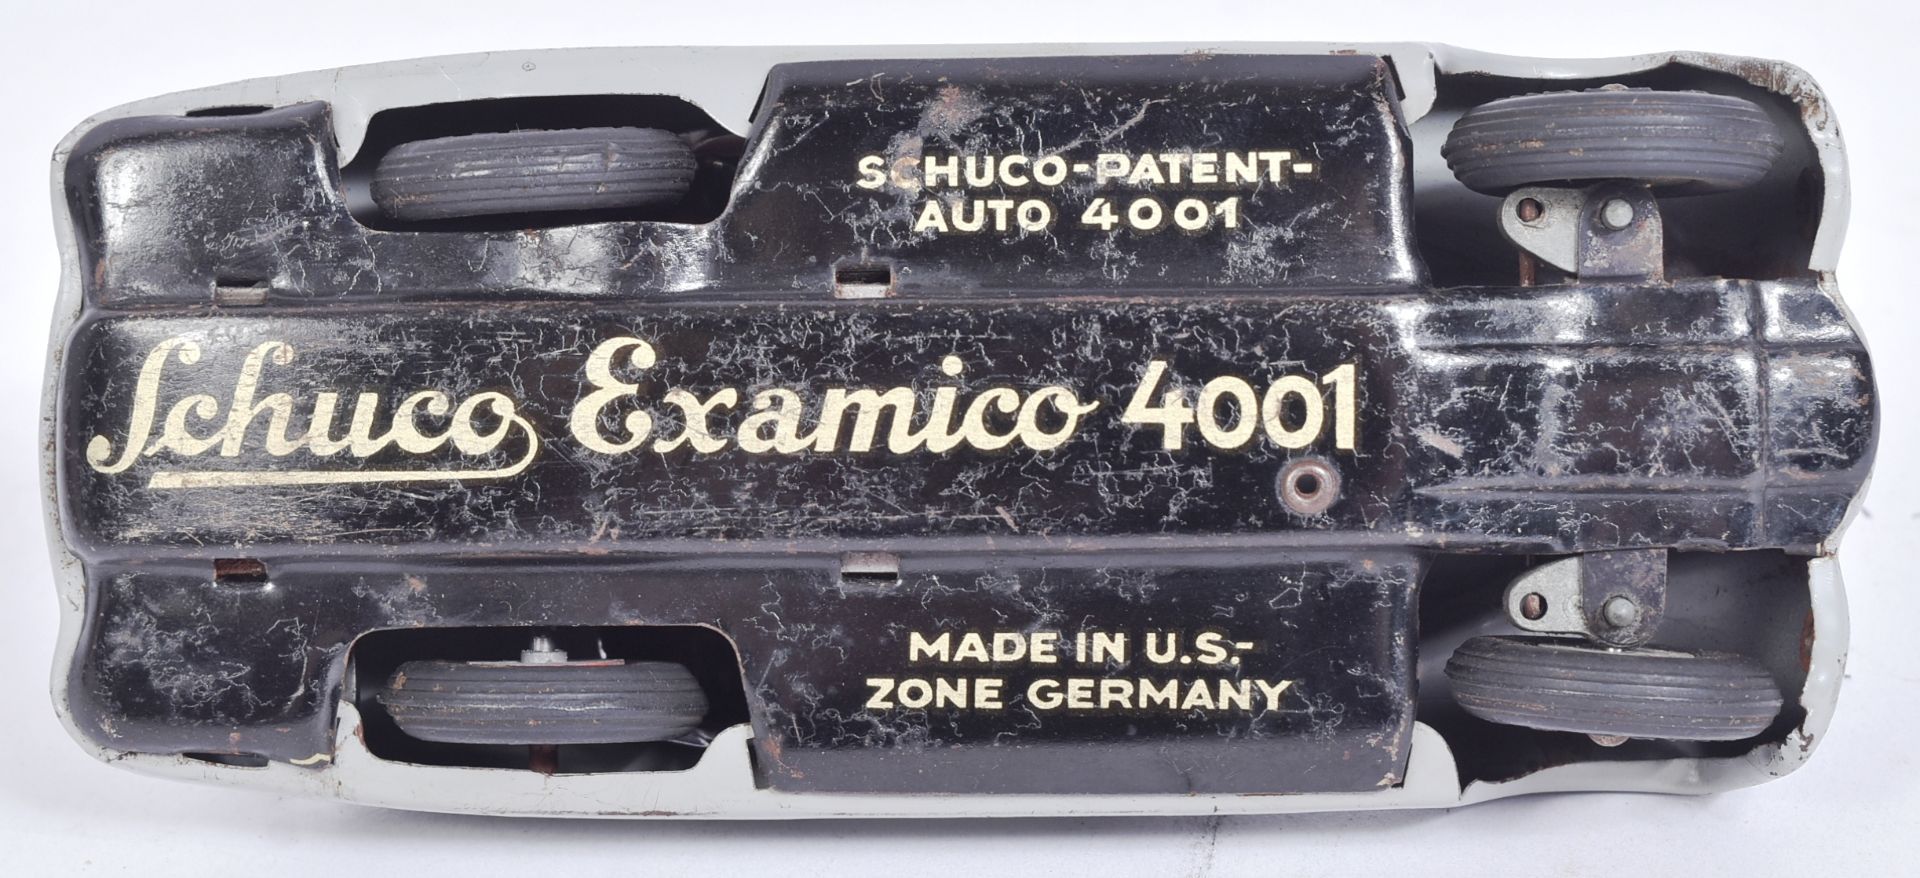 VINTAGE SCHUCO TINPLATE CLOCKWORK MODEL EXAMICO 4001 - Image 5 of 5